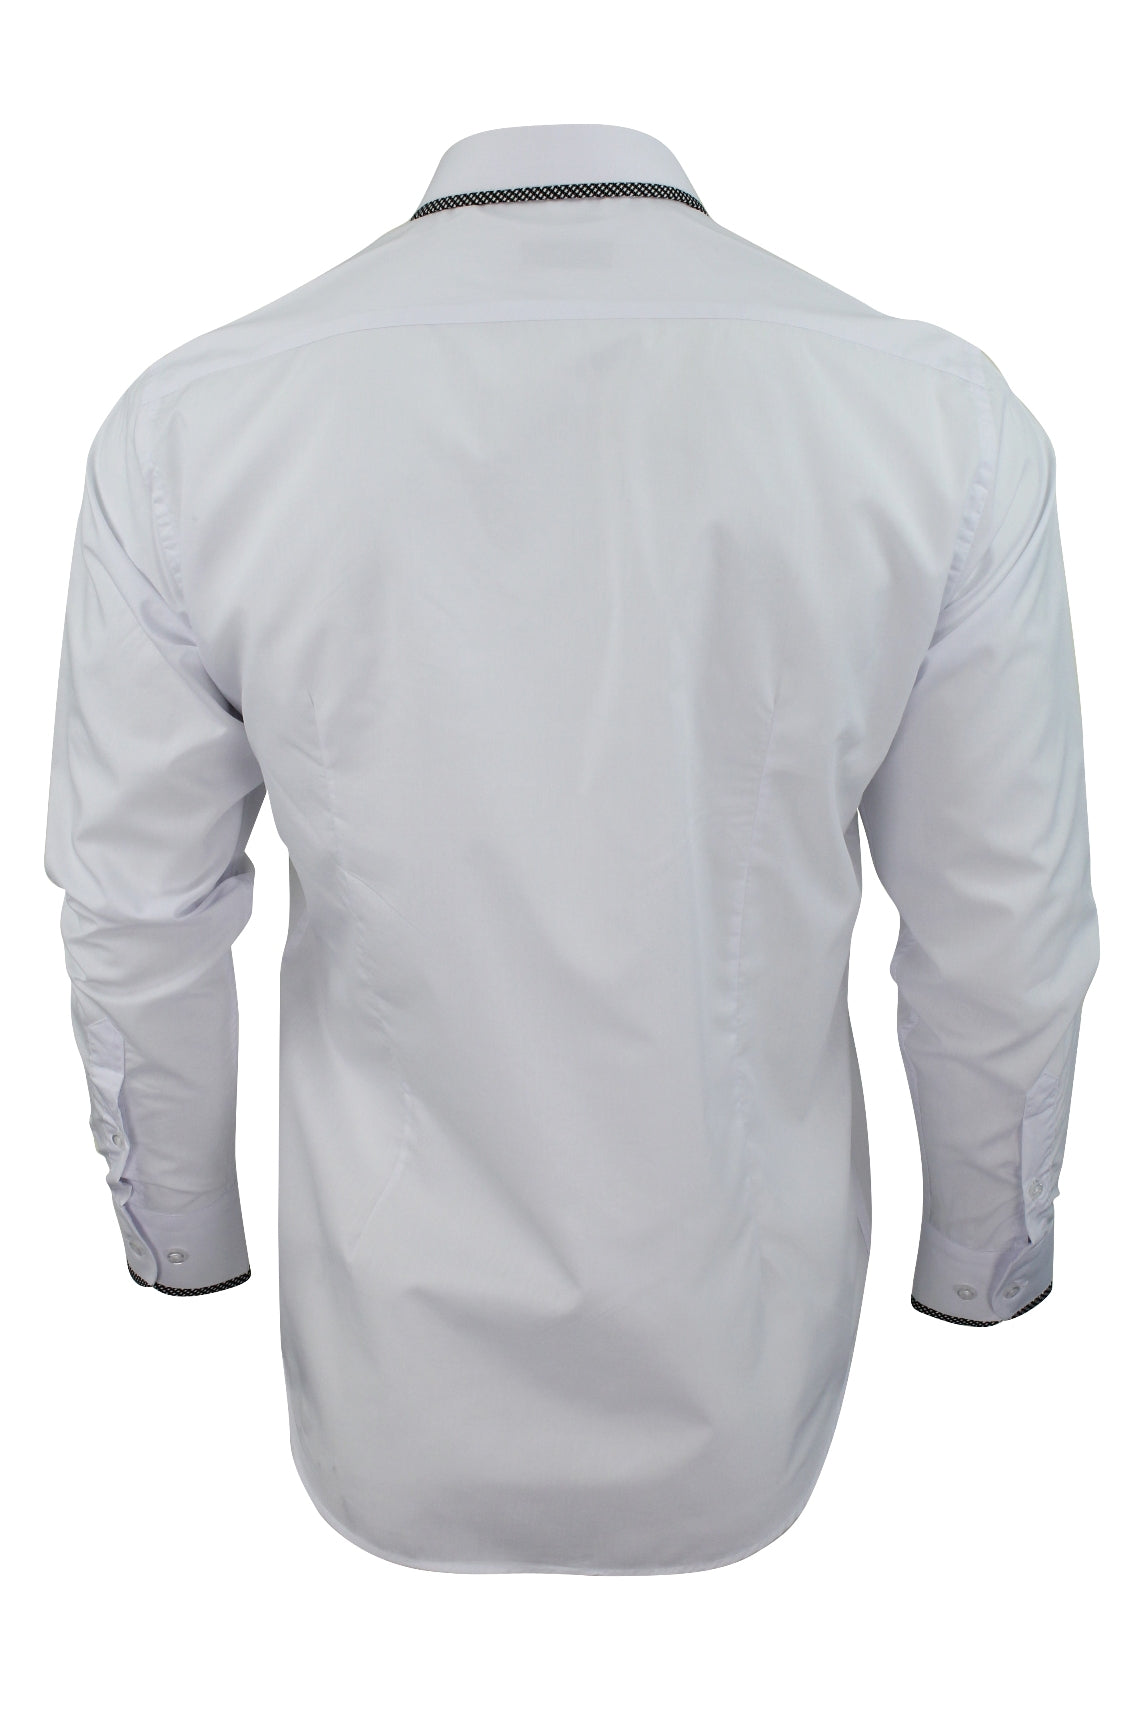 Mens Shirt by Xact Clothing Dog Tooth Collar & Cuff Trim (White)-4